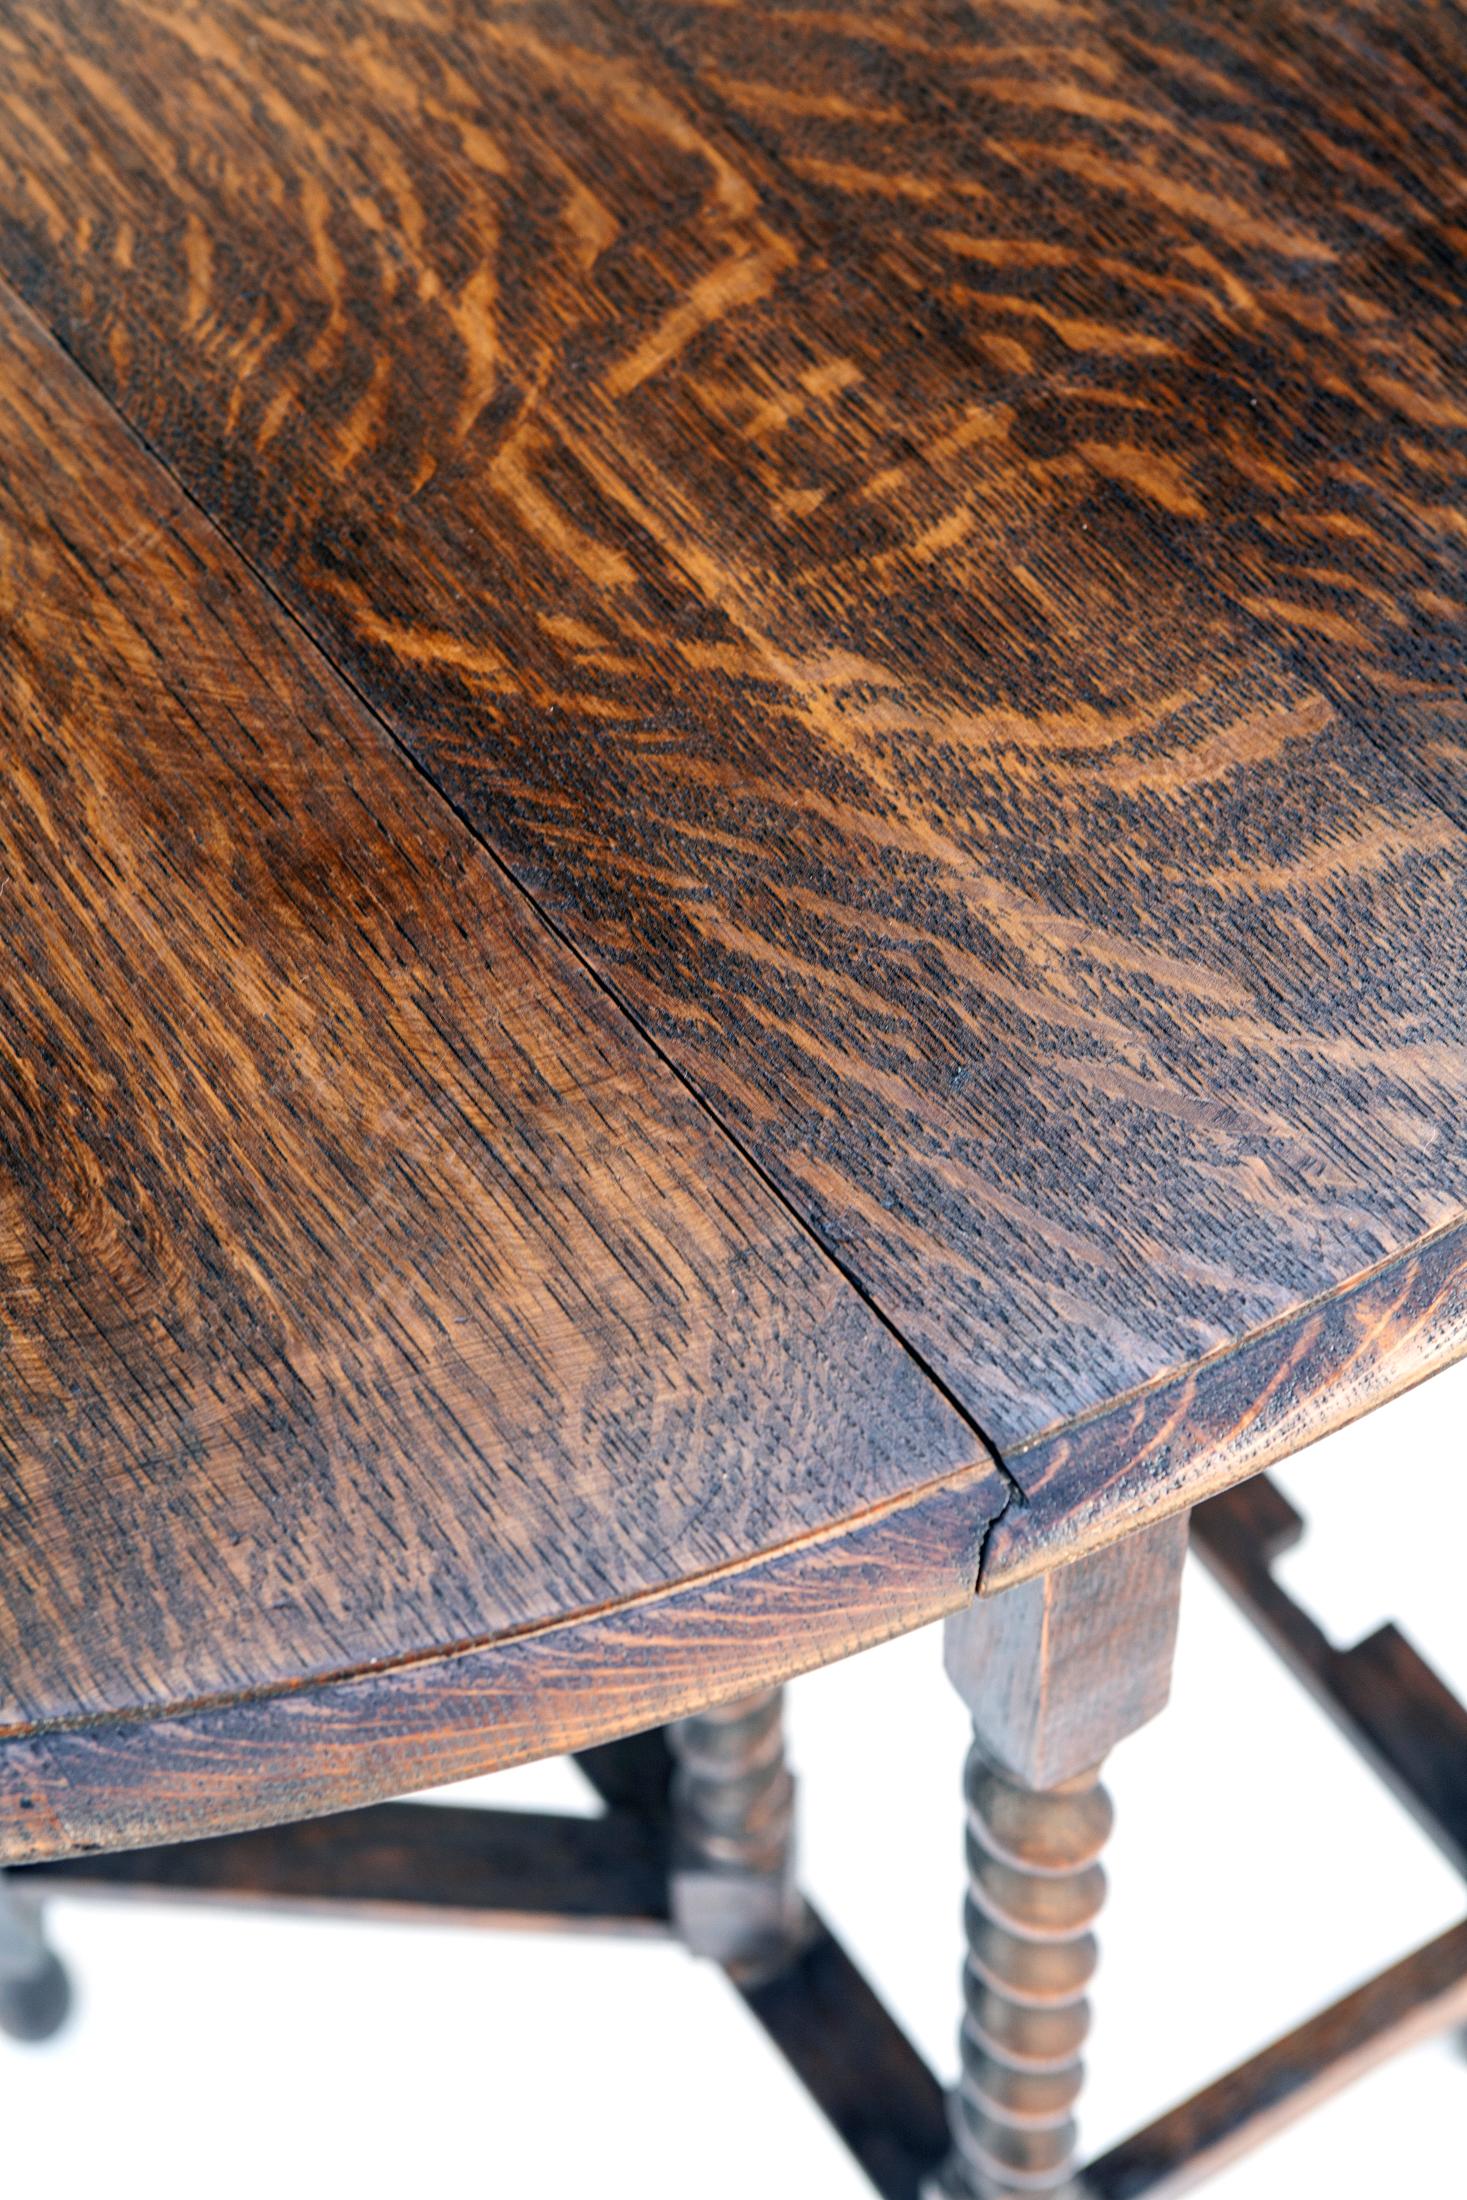 19th Century Turned Oak Barleycorn Drop Leaf Table